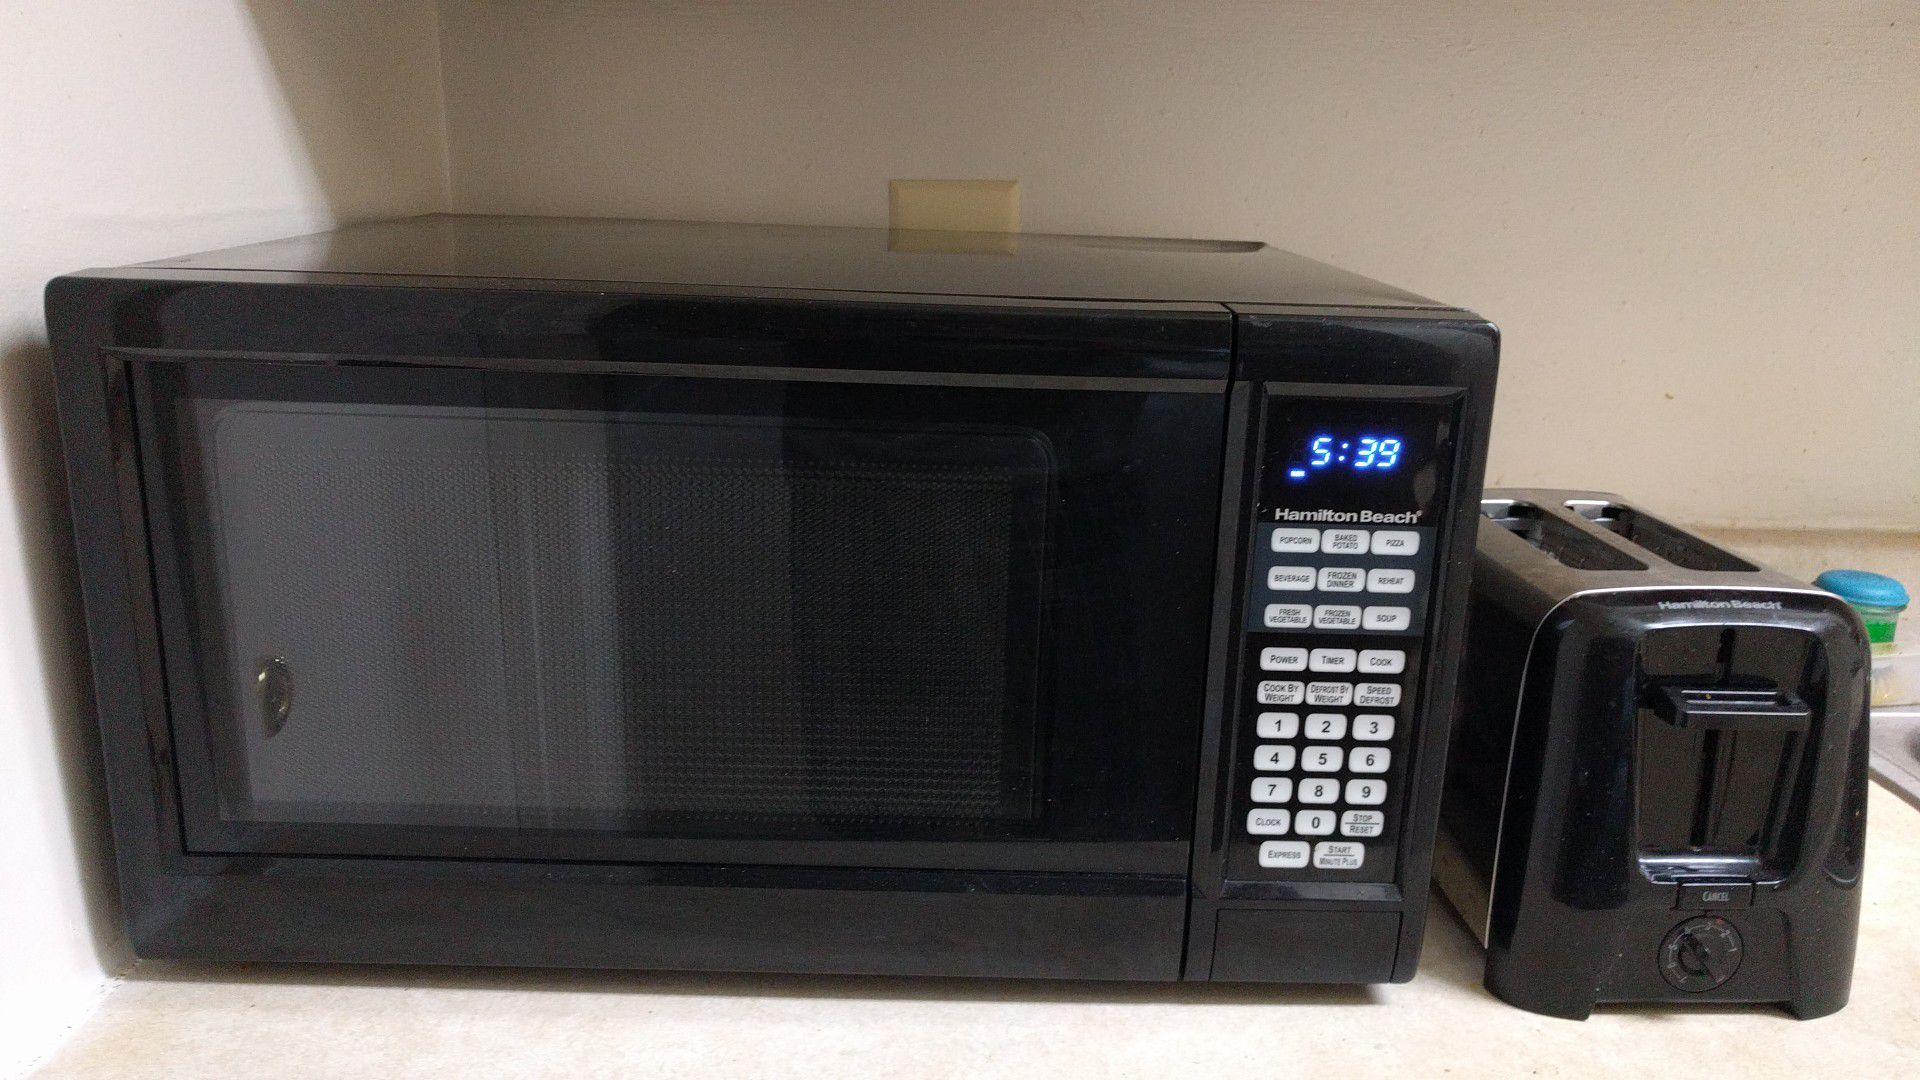 Hamilton Beach Microwave Oven and Toaster